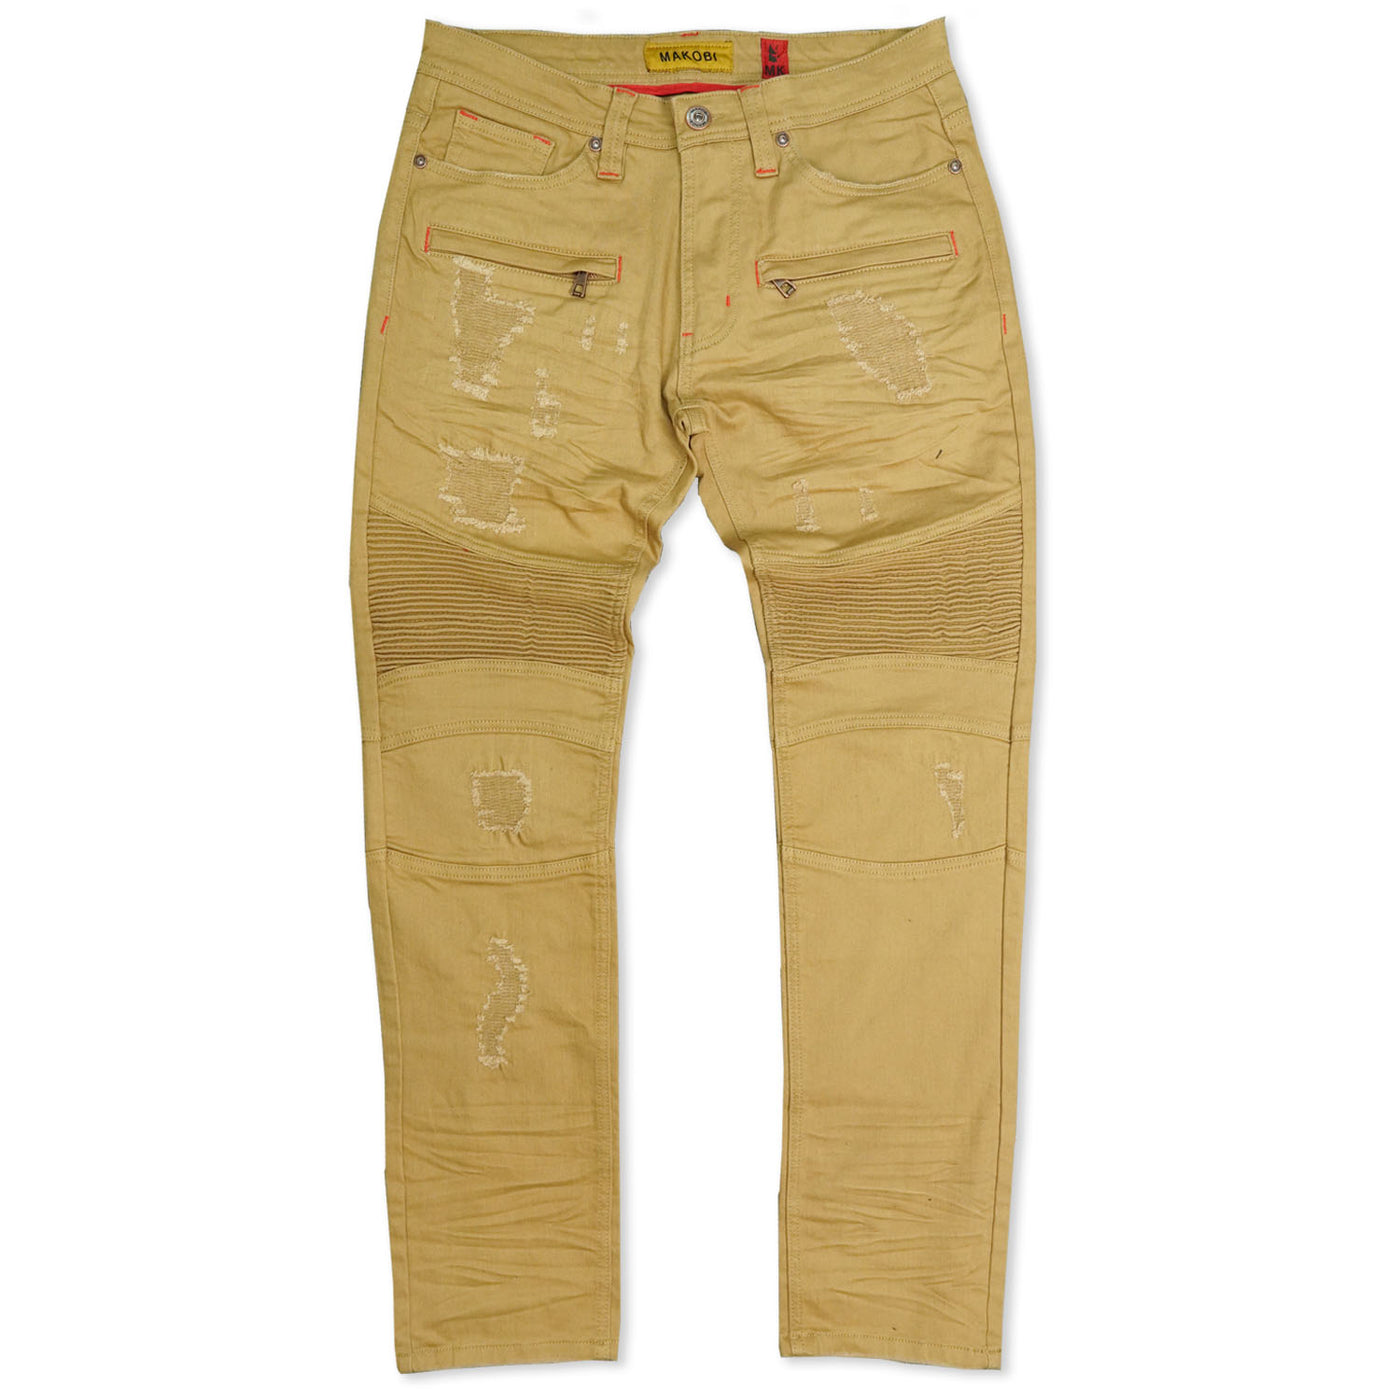 M1786 Makobi Prado Biker Jeans pẹlu Rip &amp; Tunṣe - Khaki